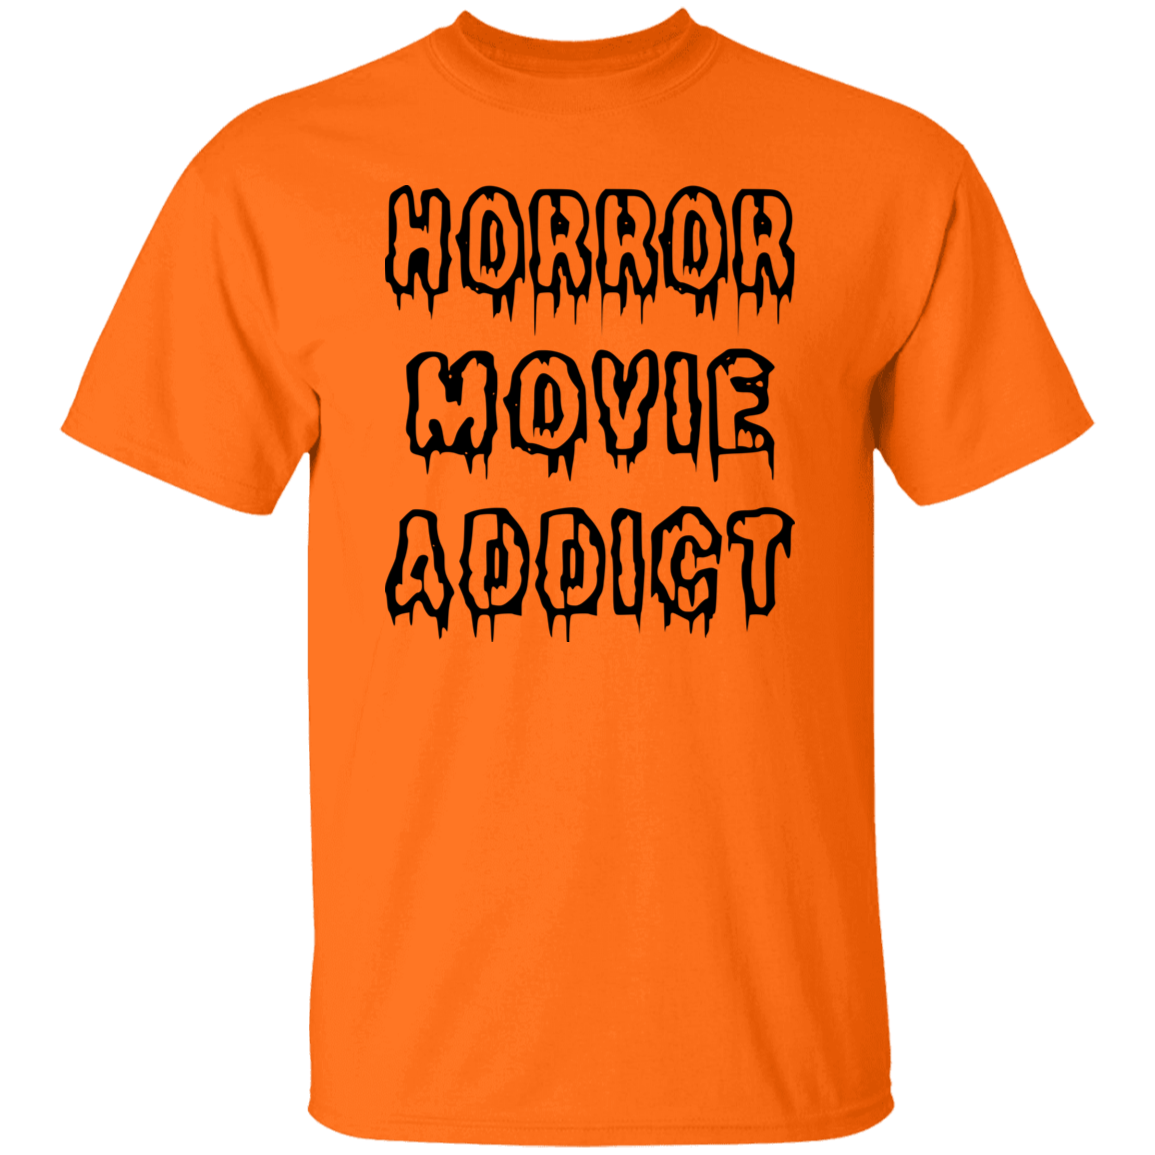 Horror 5.3 oz. T-Shirt